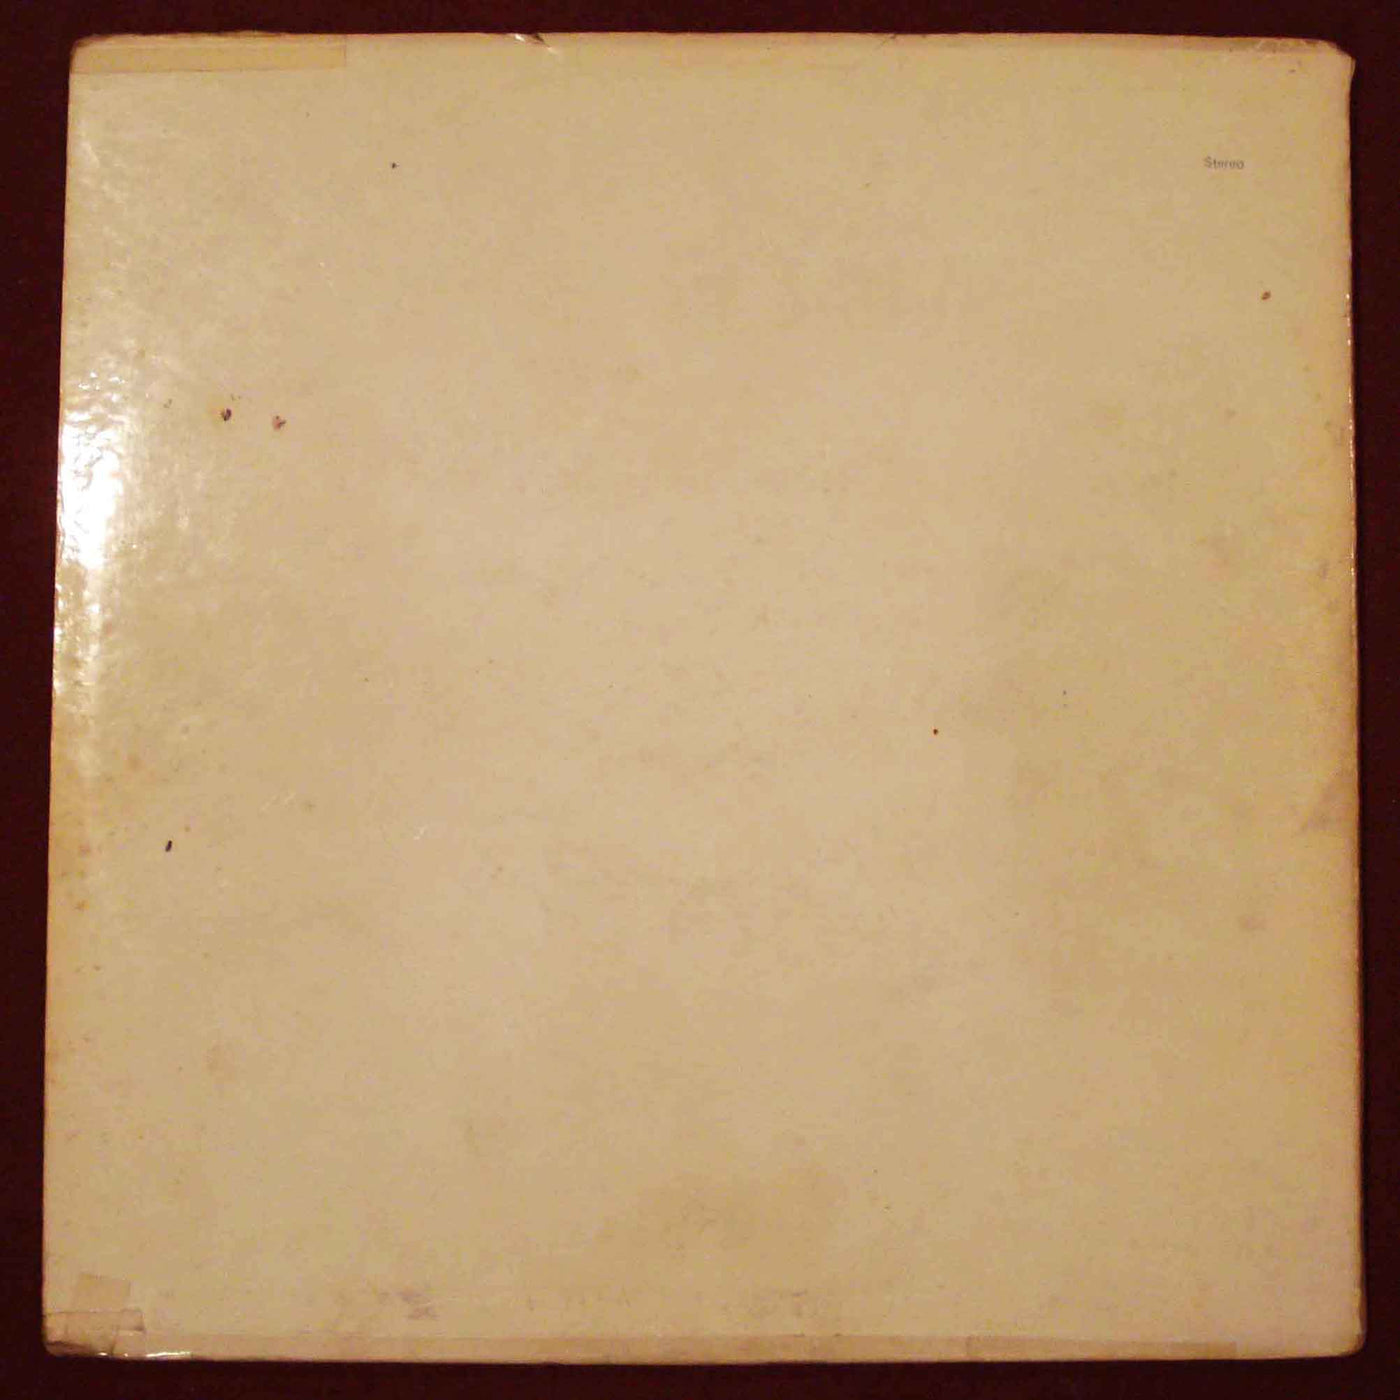 The Beatles - The White Album #2987016 (1968) Vinyl LP 33rpm SWBO101